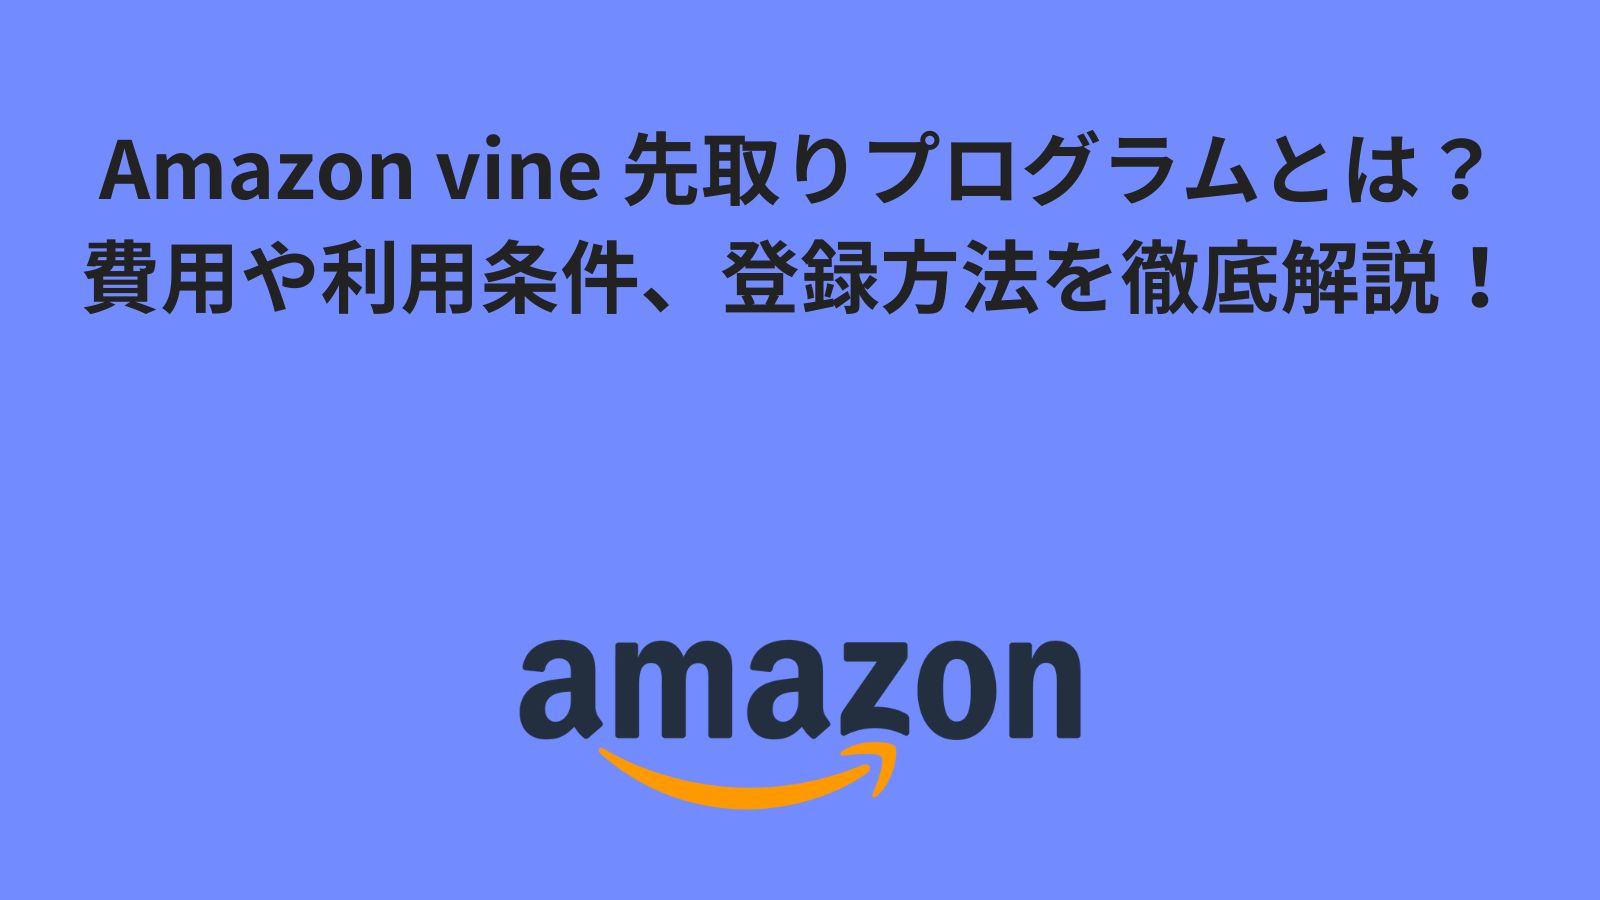 Amazon vine 先取りプログラムとは？費用や利用条件、登録方法を徹底解説！